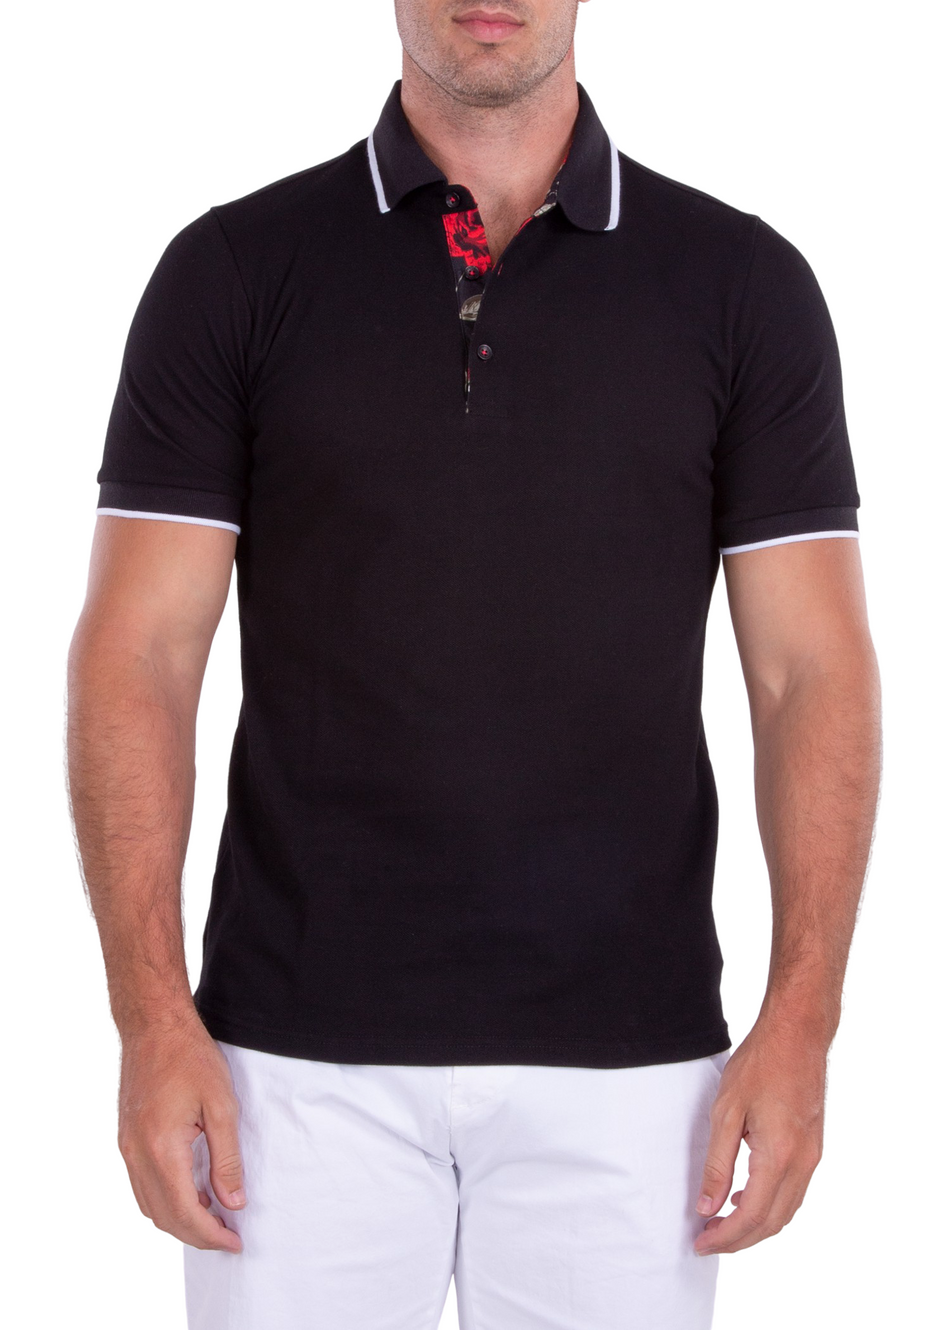 201817P - Black Polo Shirt